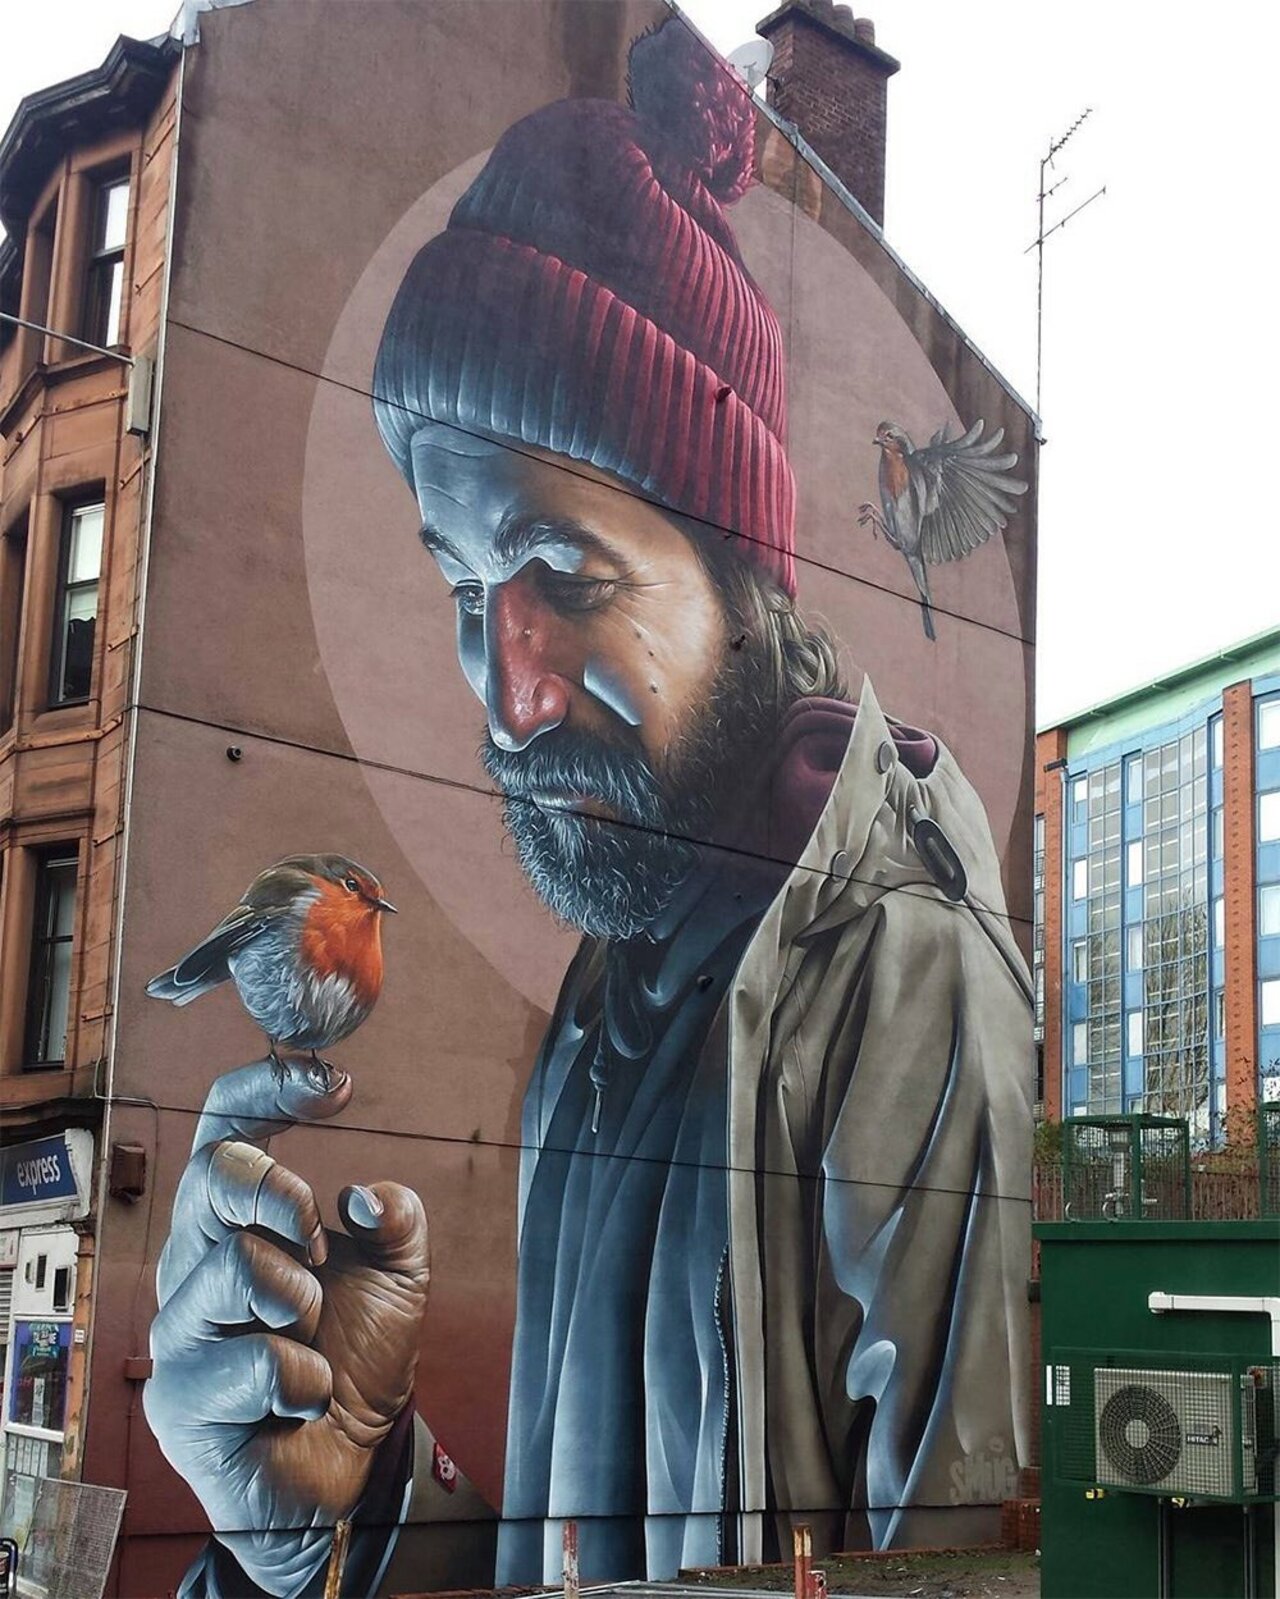 Mural by Smug #Glasgow #Scotland #mural #art #streetart #urbanart #graffiti https://t.co/oxbzxyM8qC